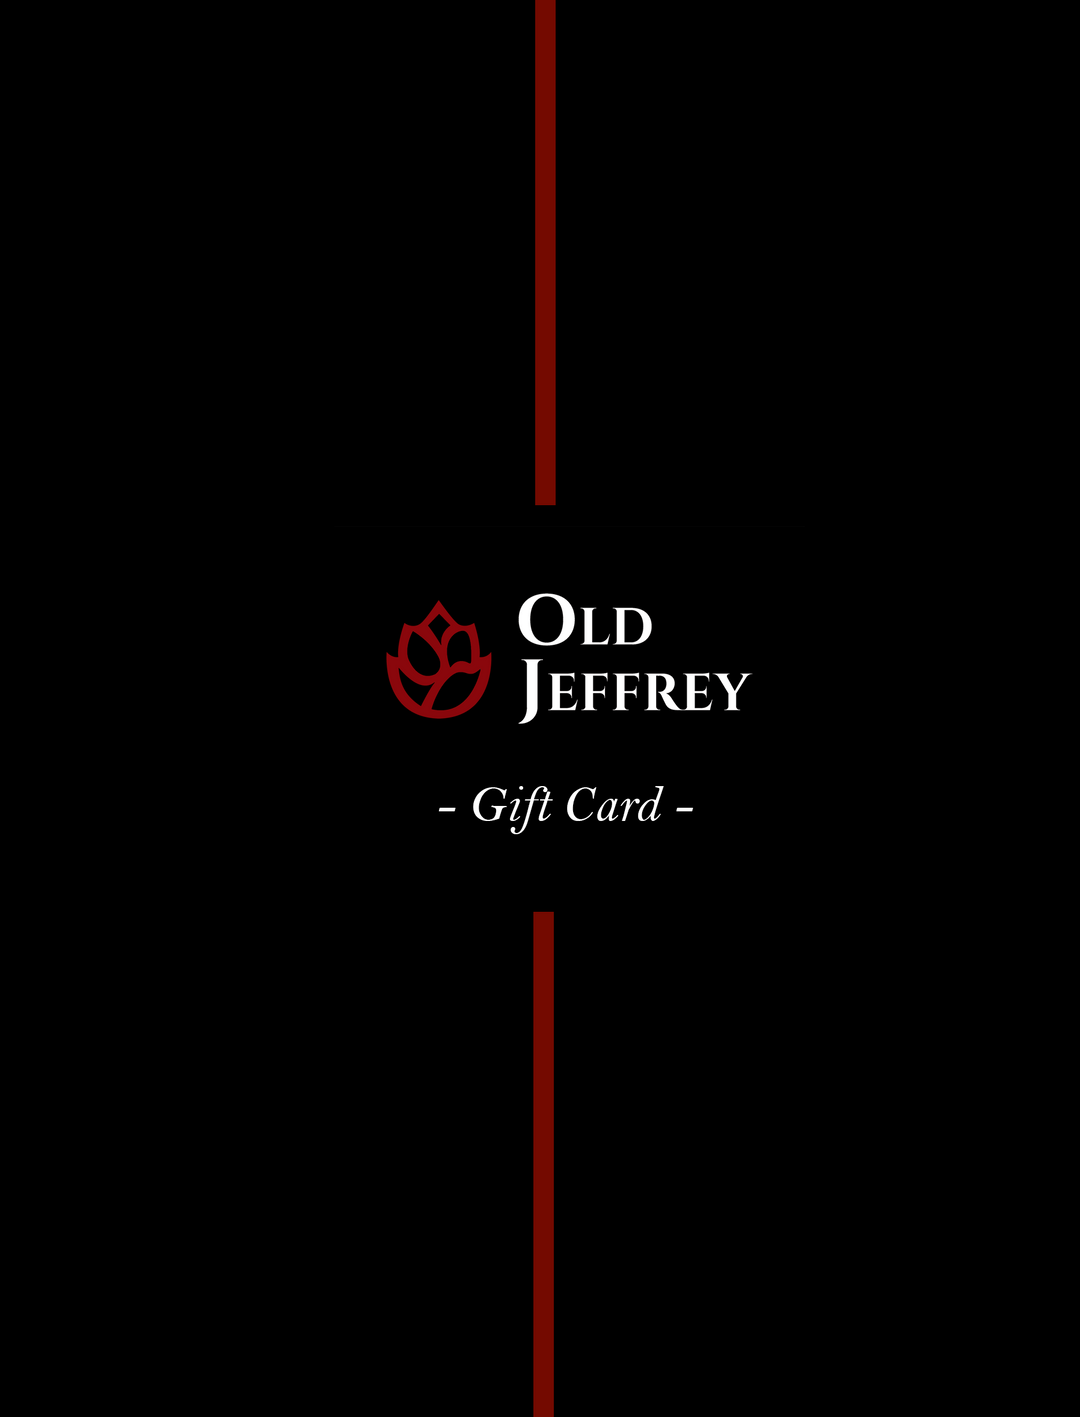 Old Jeffrey gift card